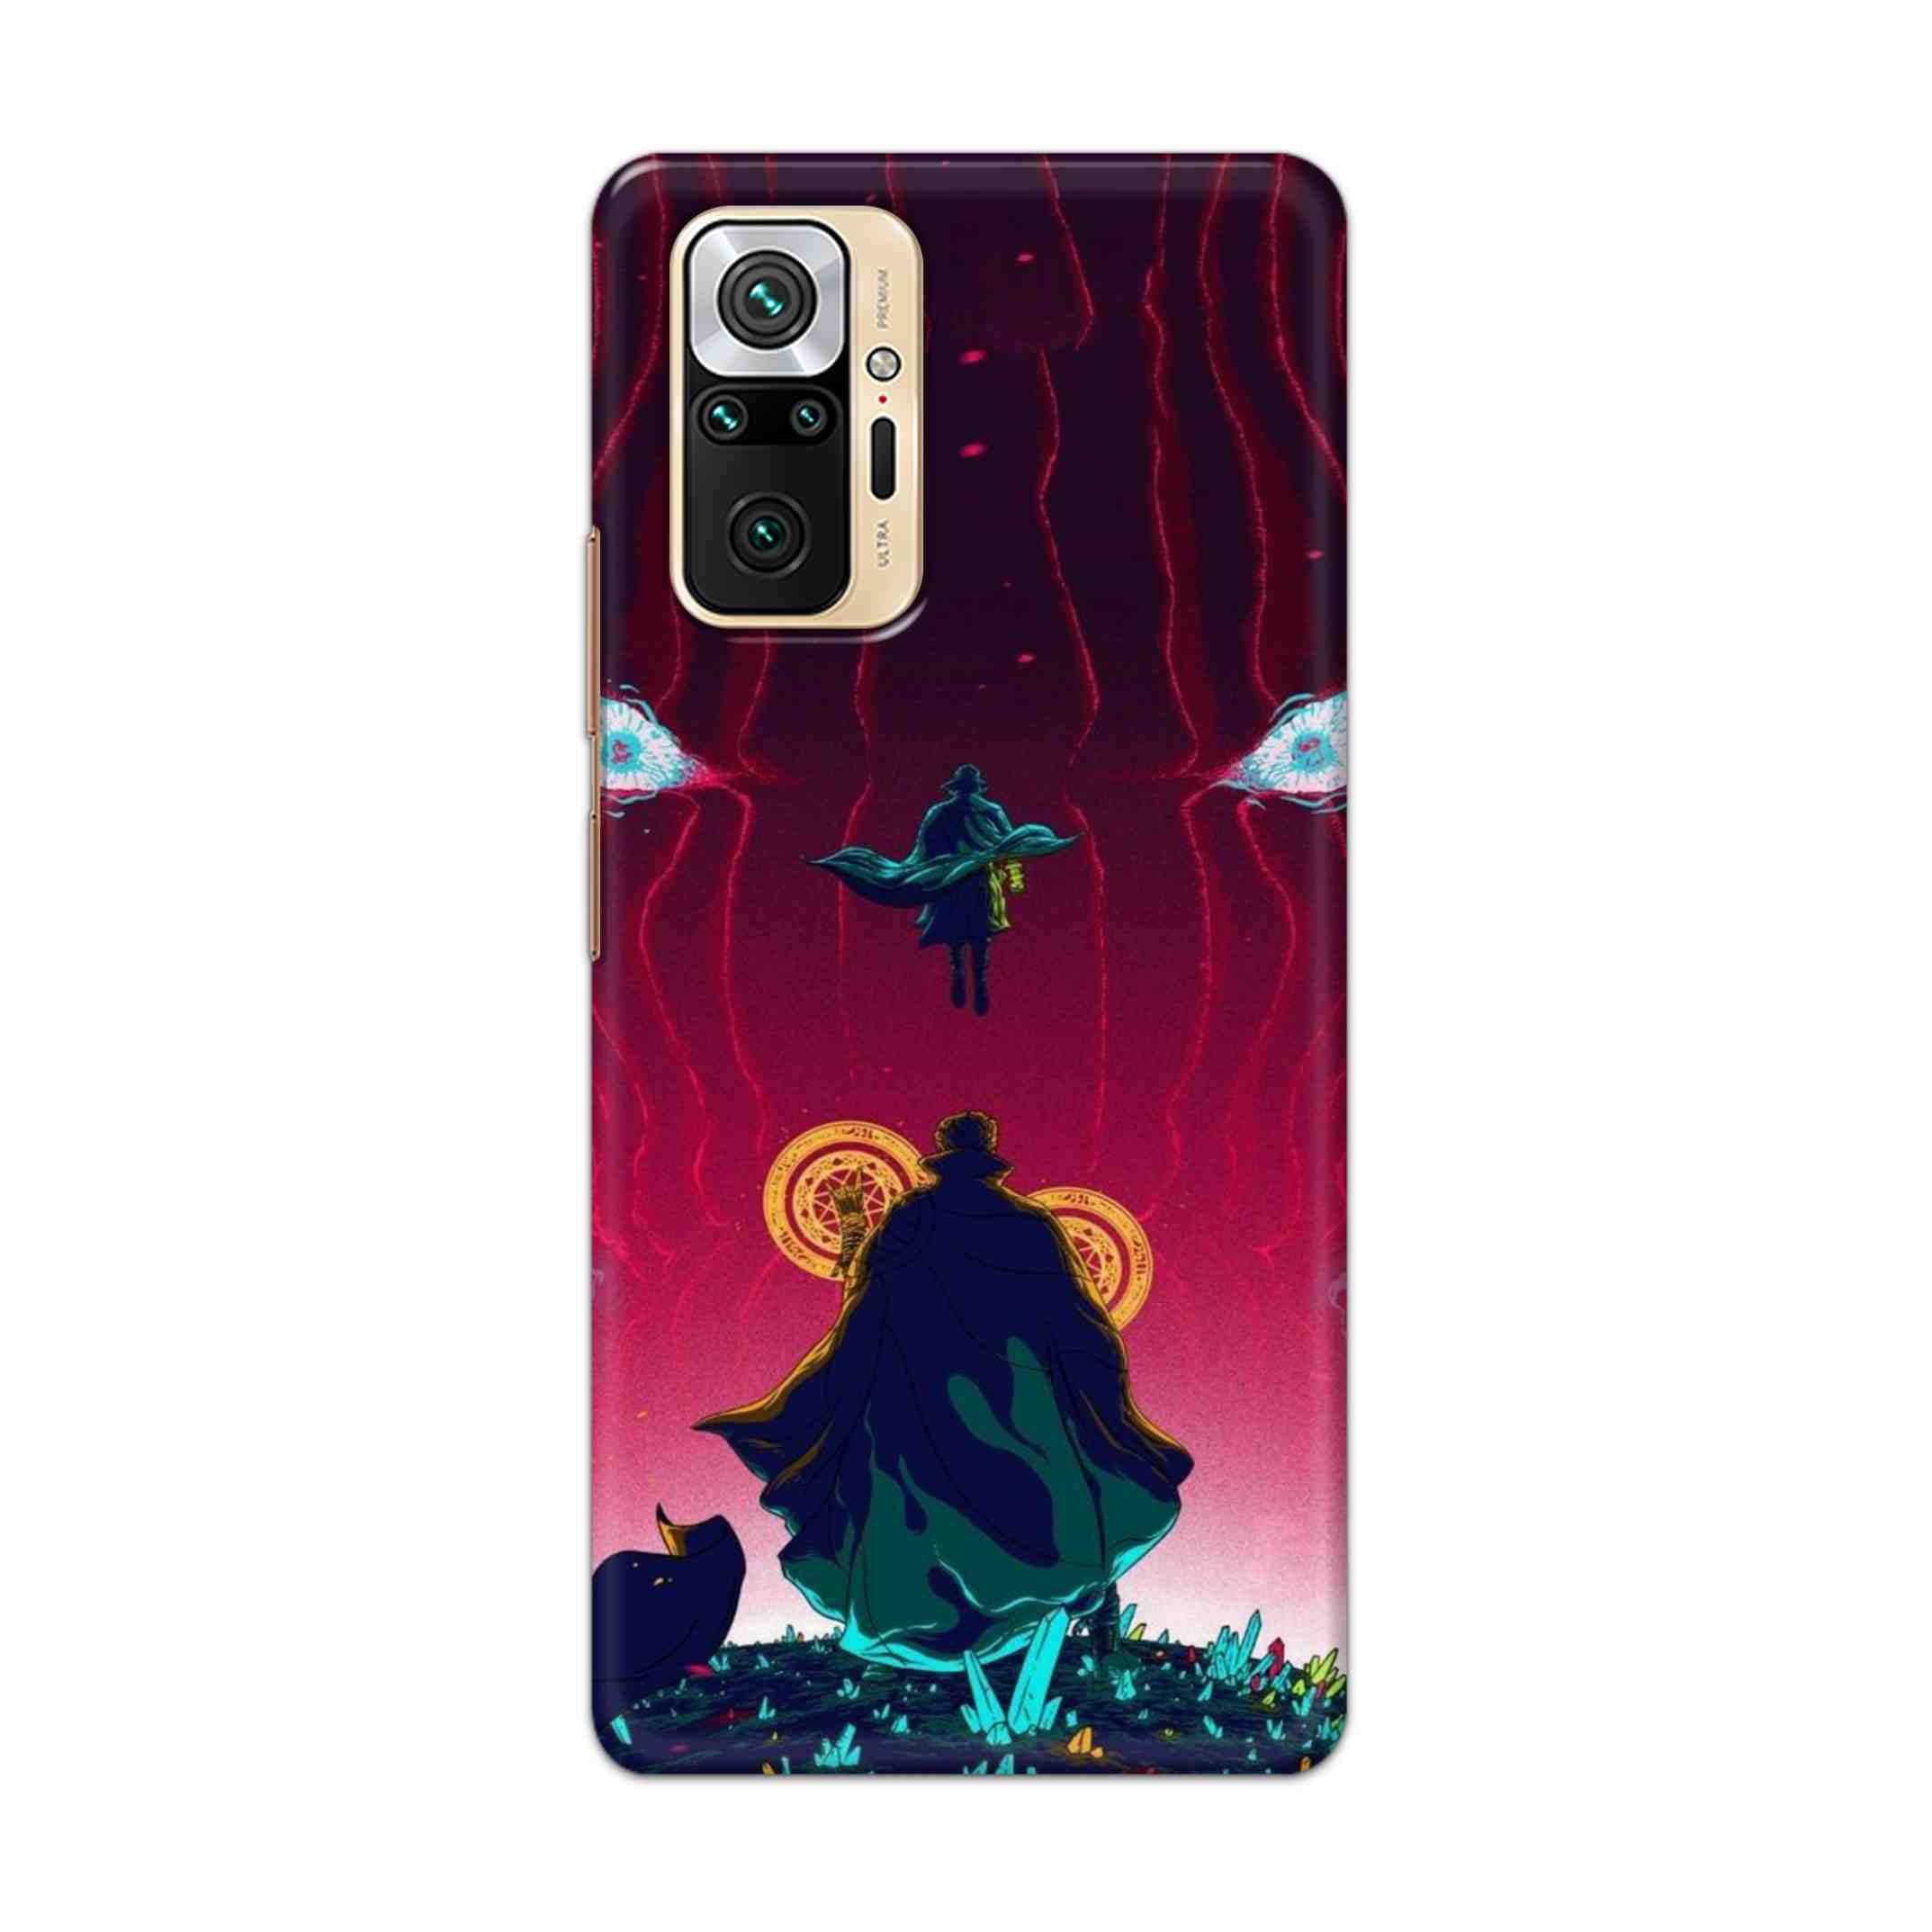 Buy Doctor Strange Hard Back Mobile Phone Case Cover For Redmi Note 10 Pro Online